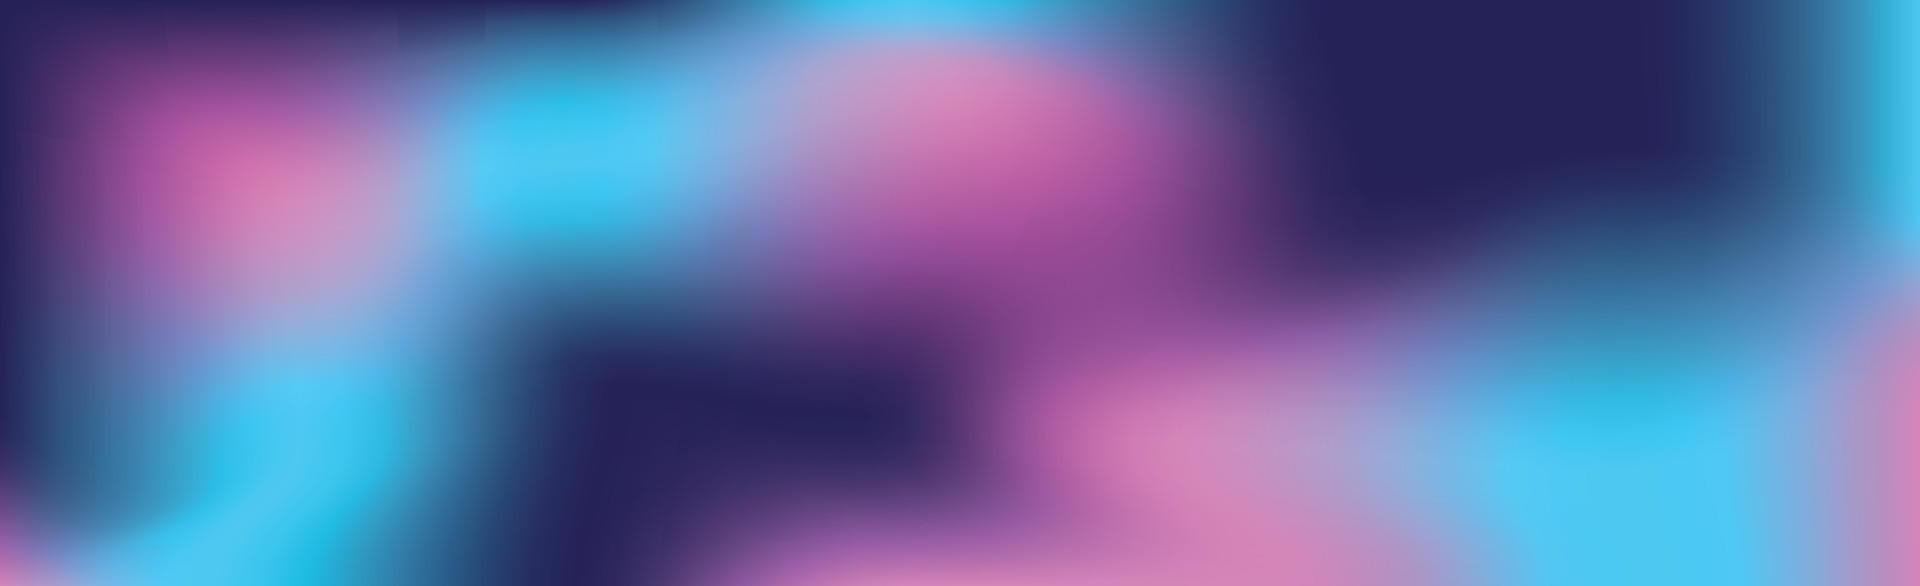 fundo panorâmico abstrato gradiente azul escuro - vetor